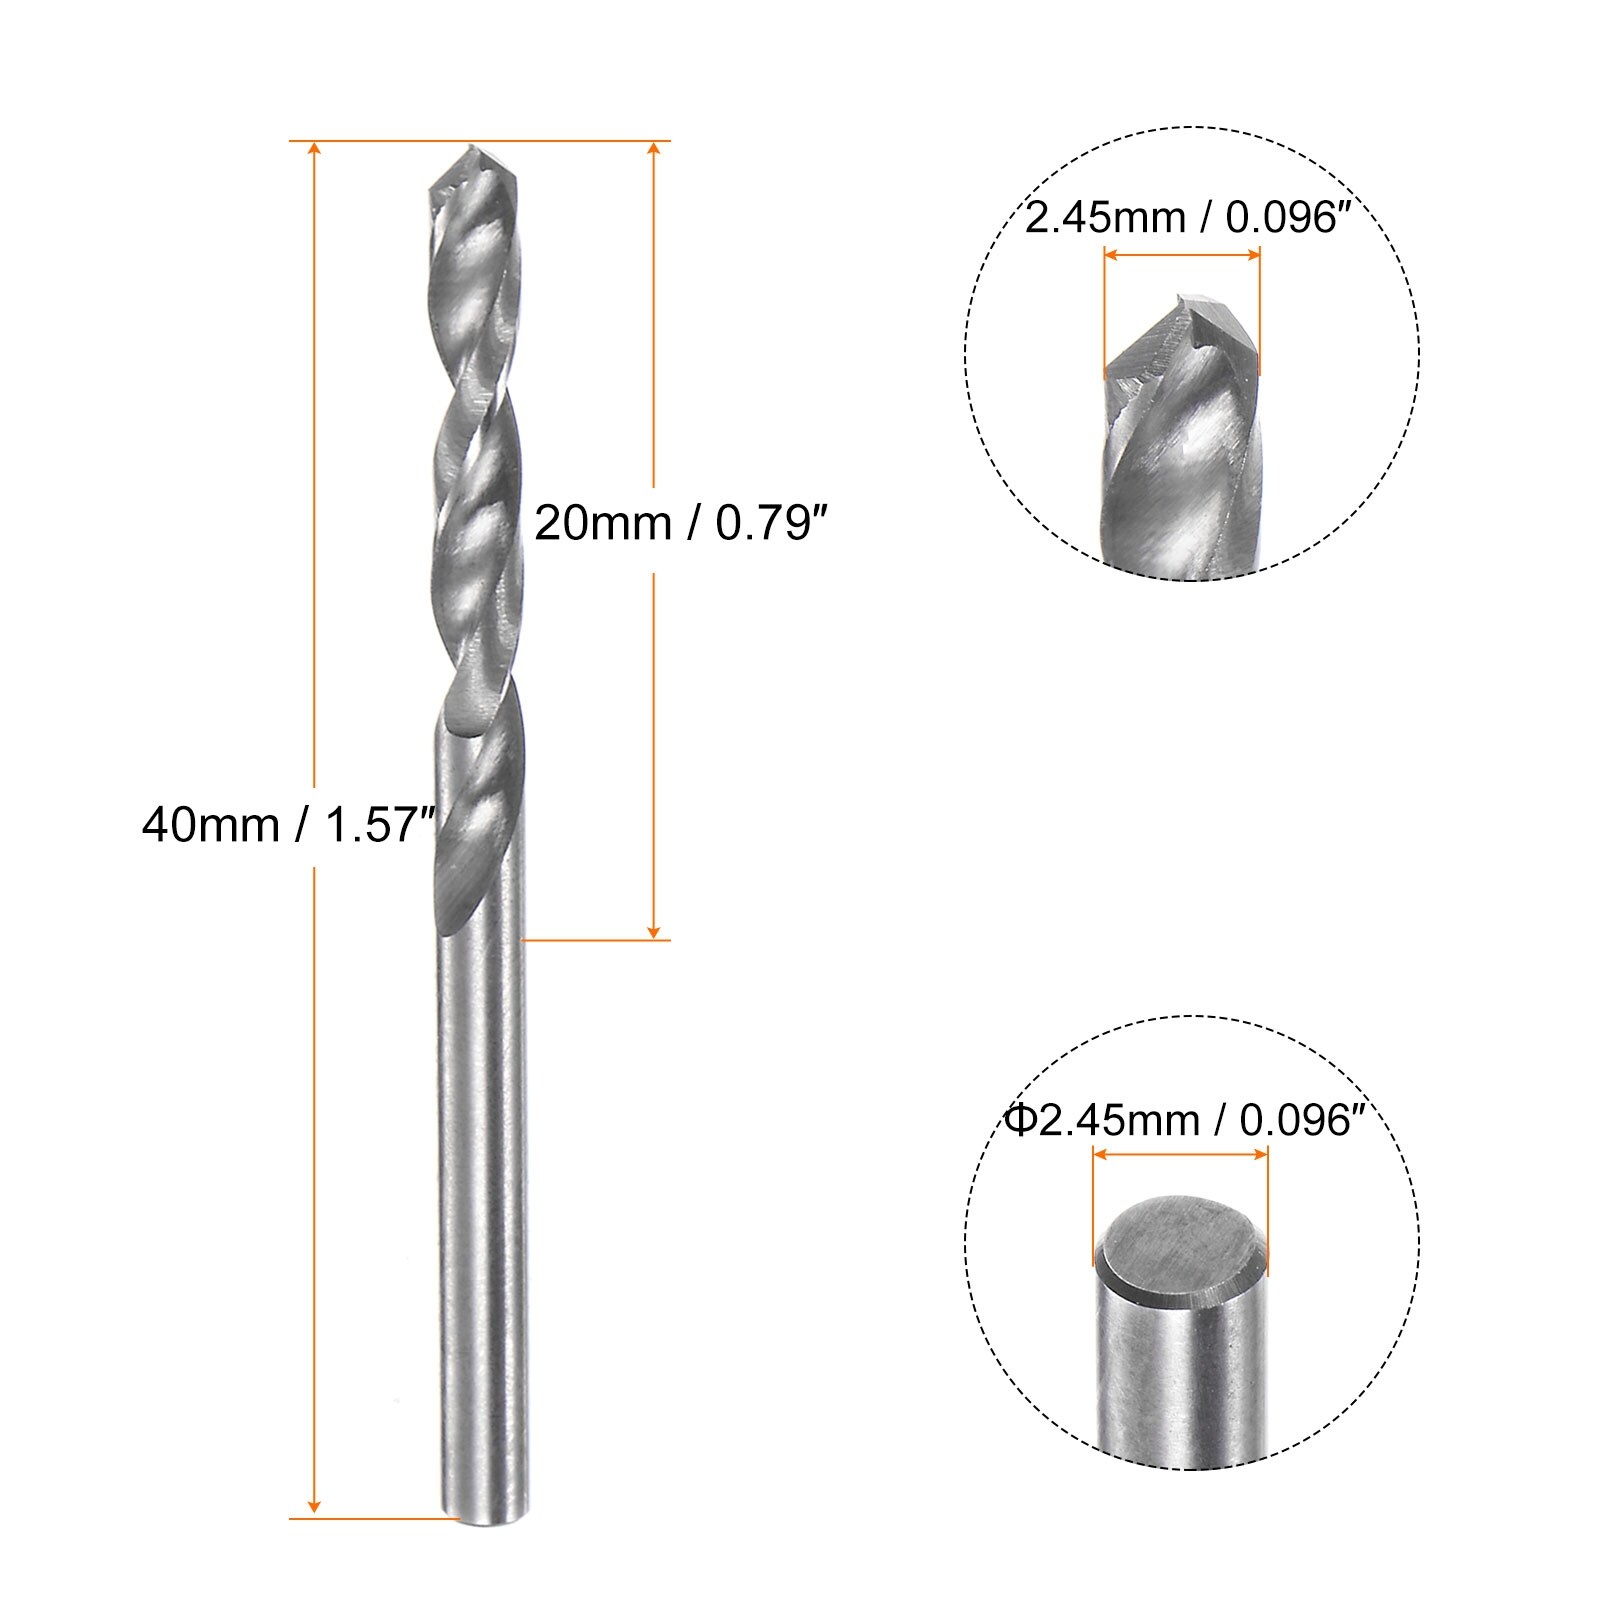 1.75mm C3/K10 Tungsten Carbide Precision Straight Shank Twist Drill Bit - Silver Tone